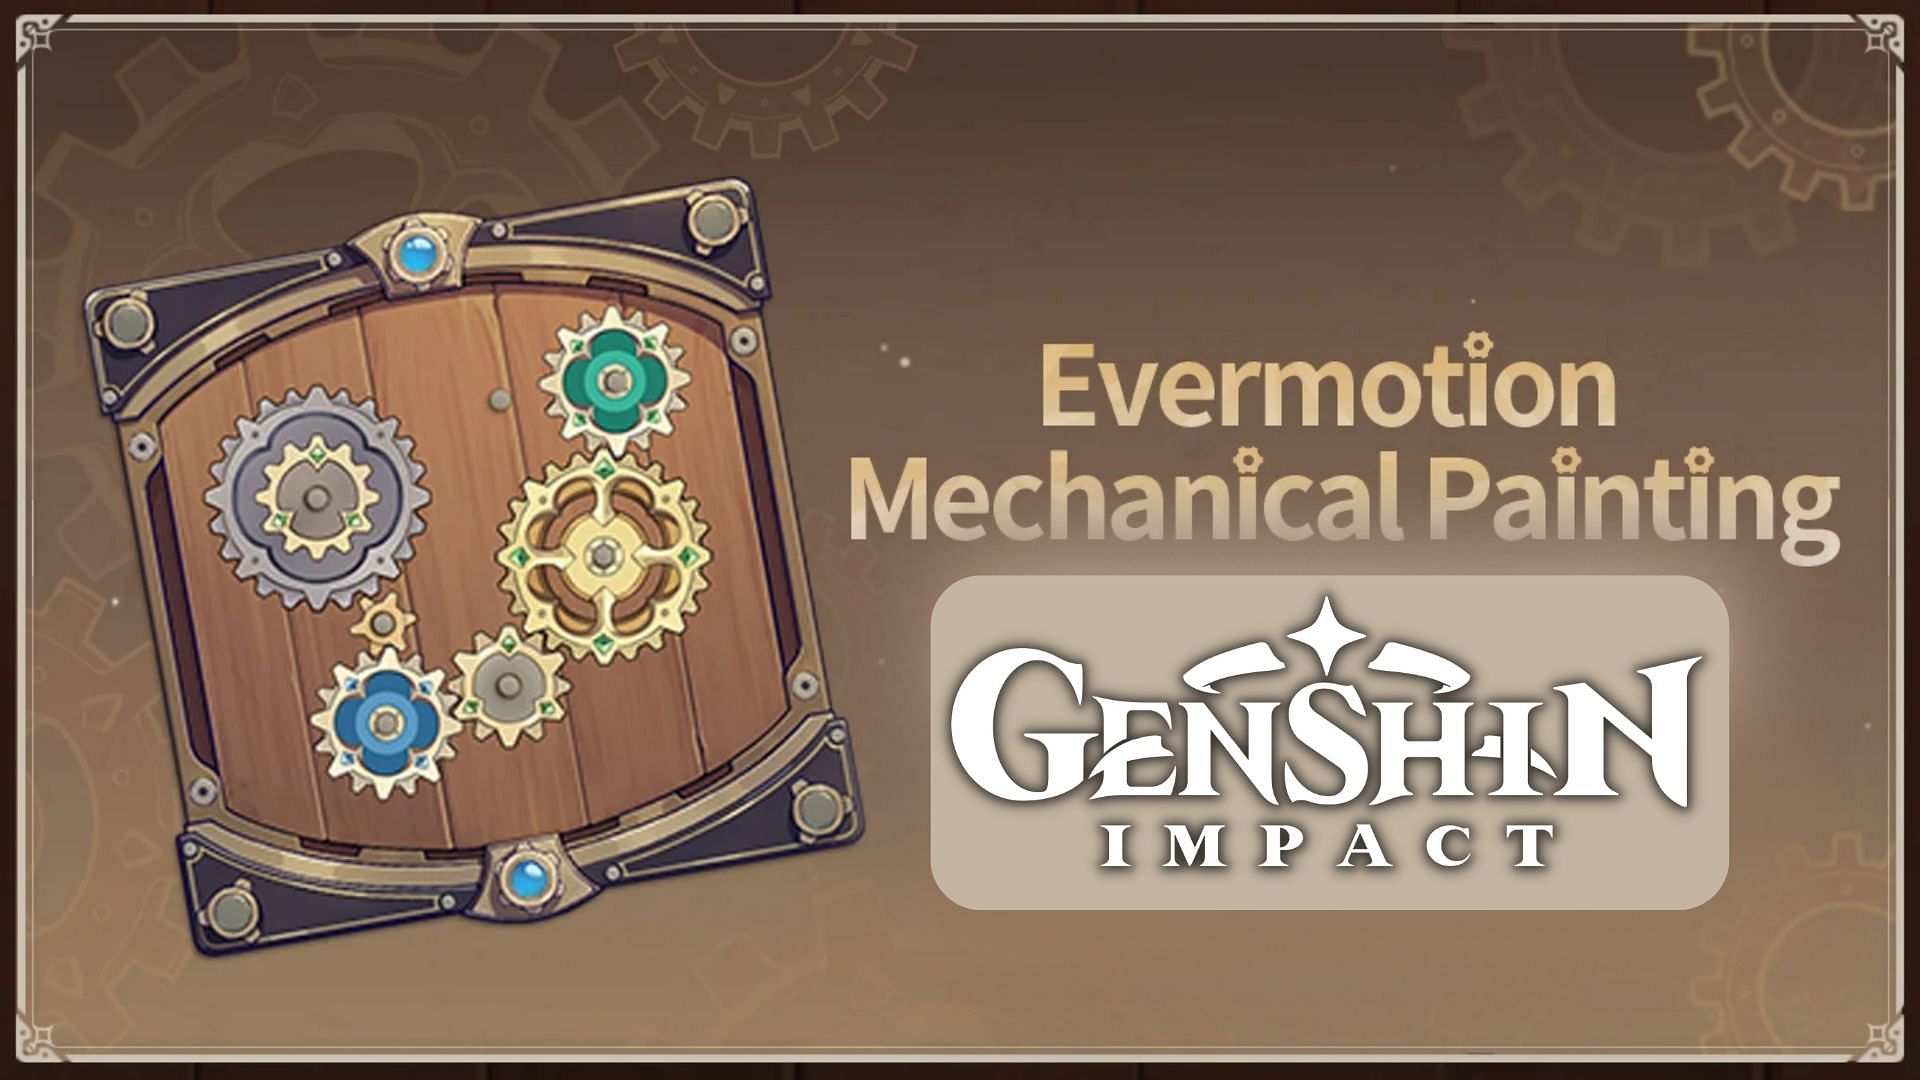 Latest puzzle event - Evermotion Mechanical Painting (image via Genshin Impact)